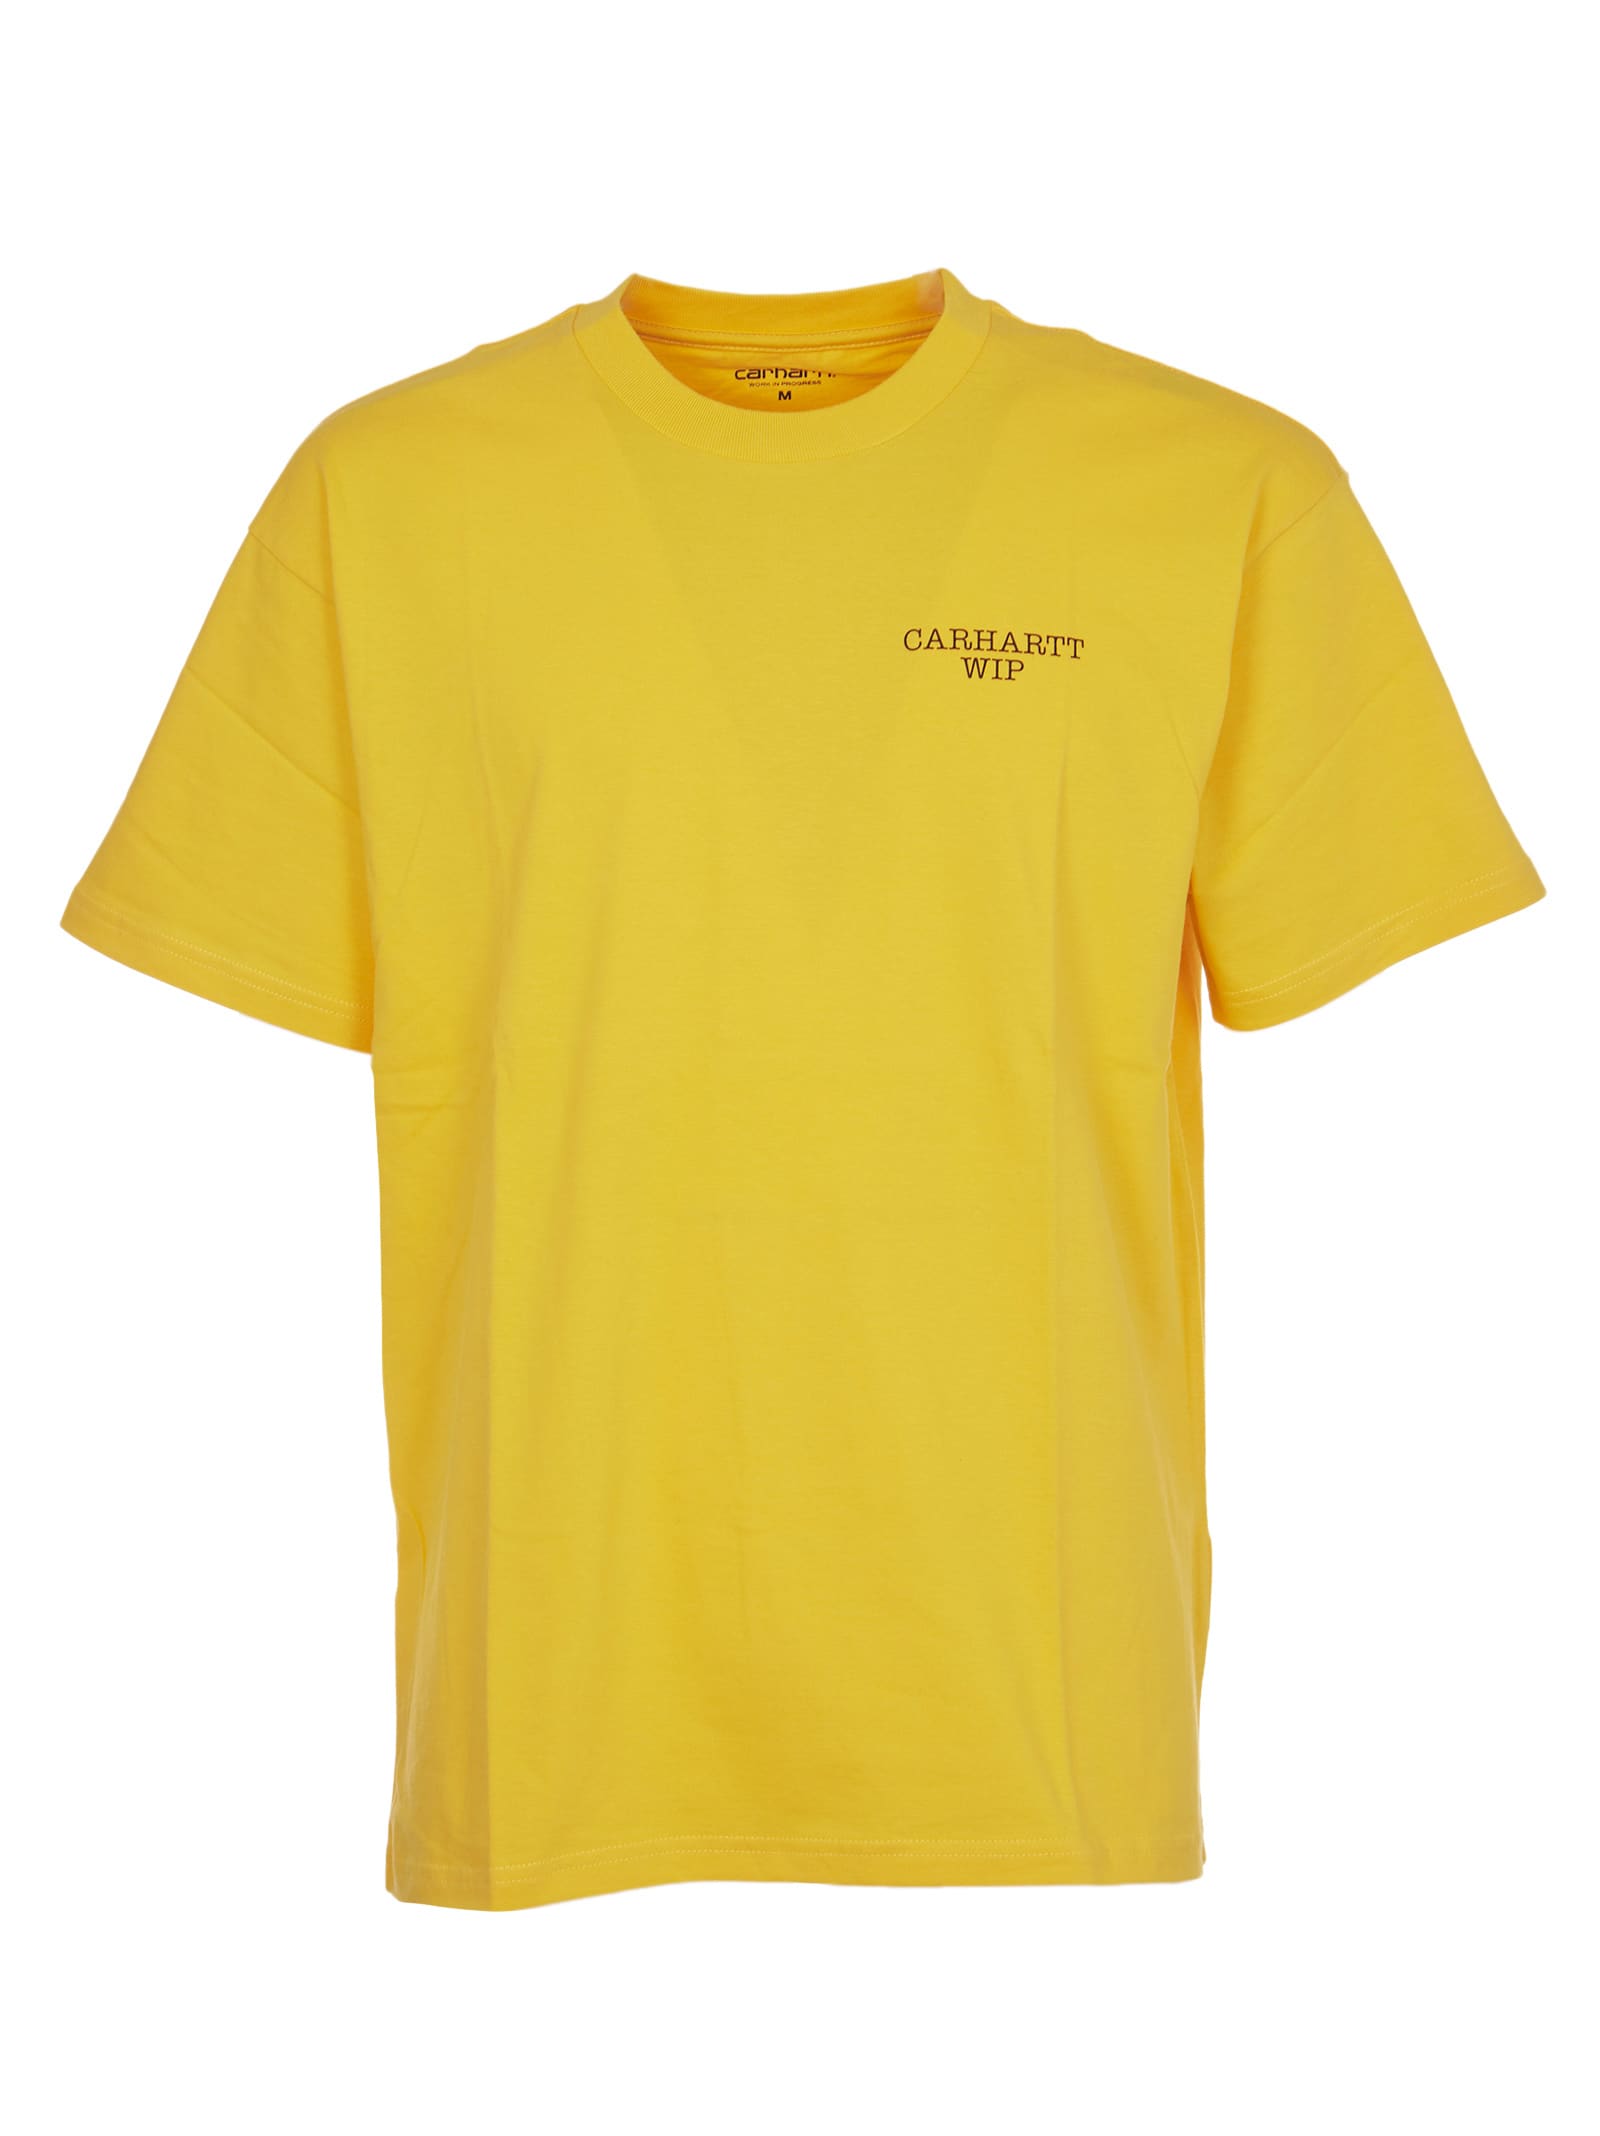 Carhartt Yellow T-shirt With Print